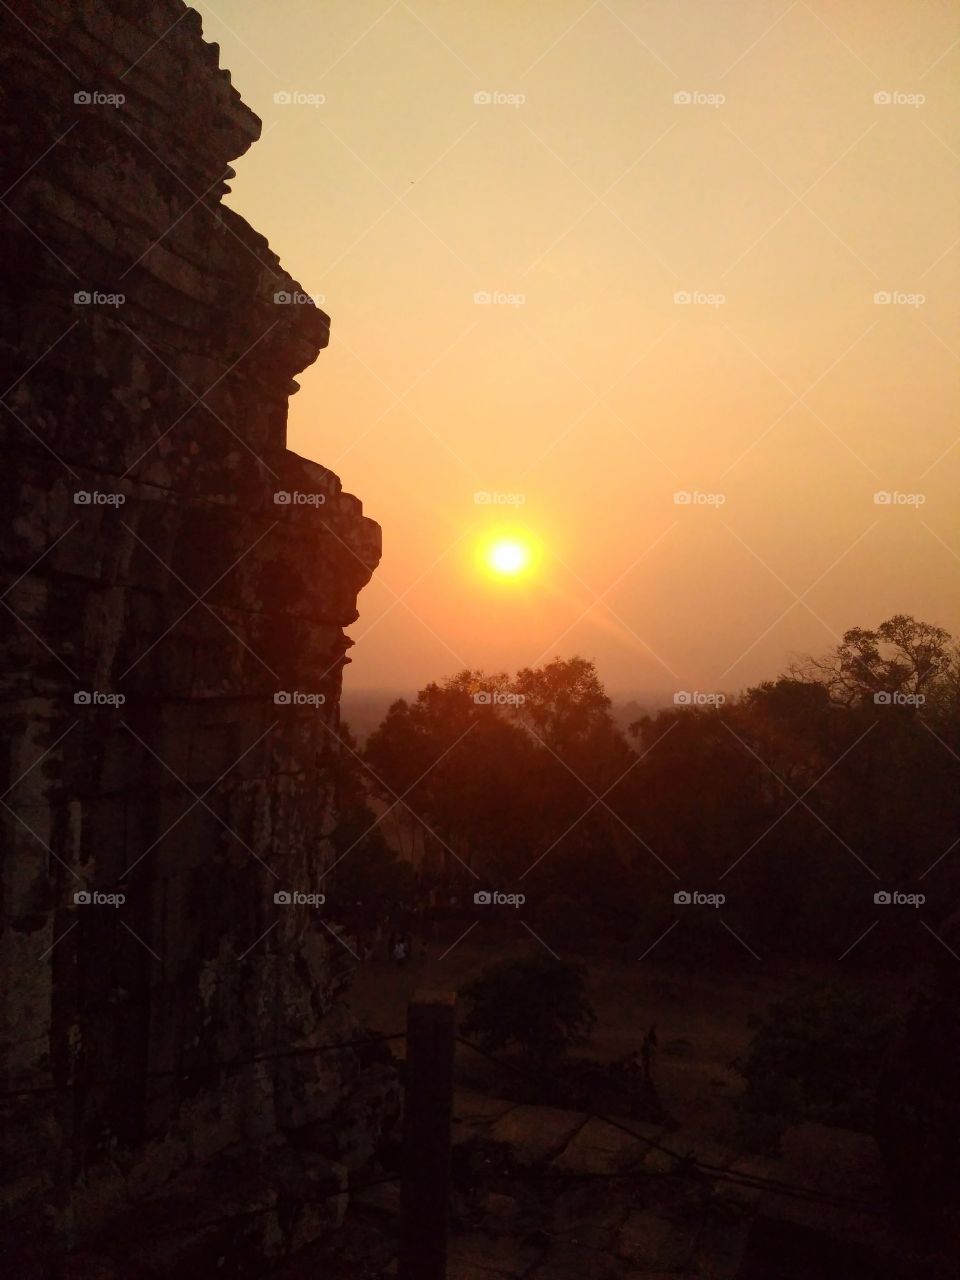 Sunset in Angkor Wat, Cambodia